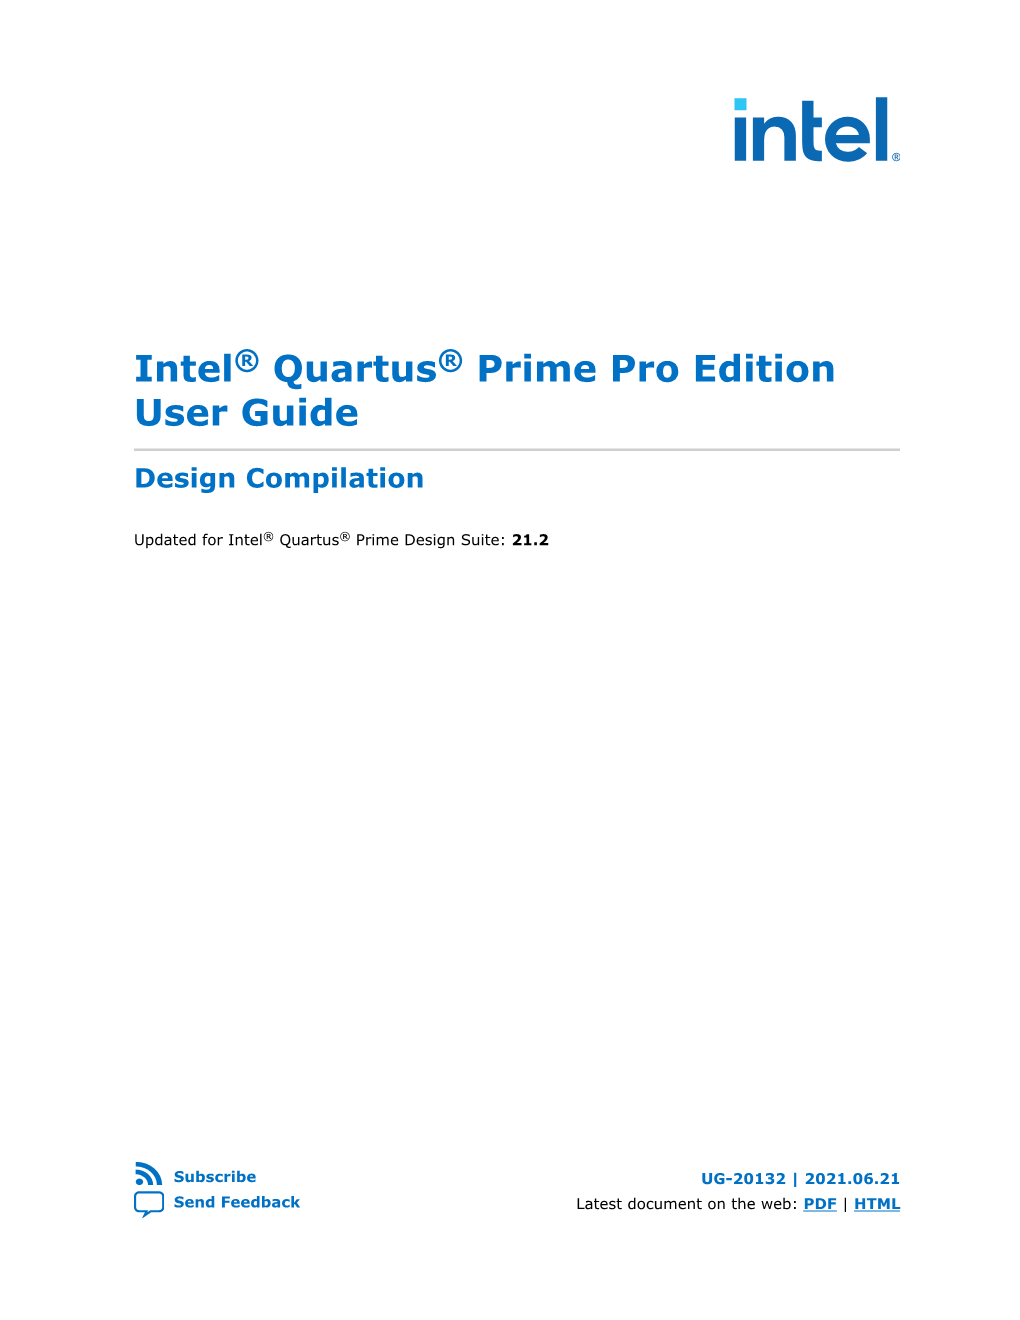 Intel Quartus Prime Pro Edition User Guide: Design Compilation Send Feedback